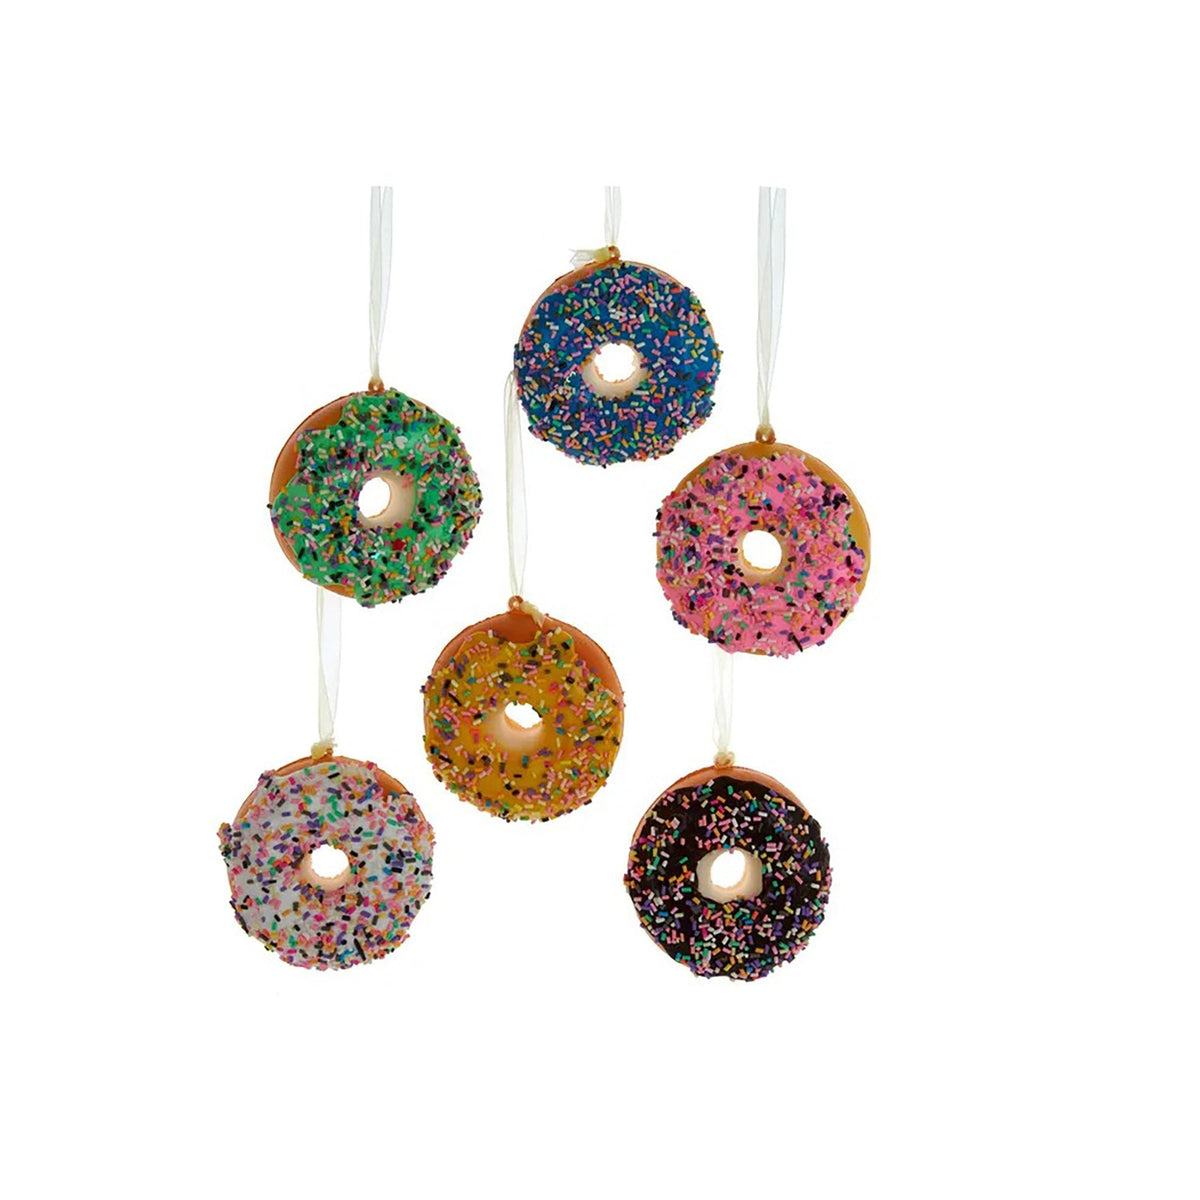 KURT S. ADLER INC Christmas Donuts Ornaments, 2,75 Inches, Assortment, 6 Counts 086131635564